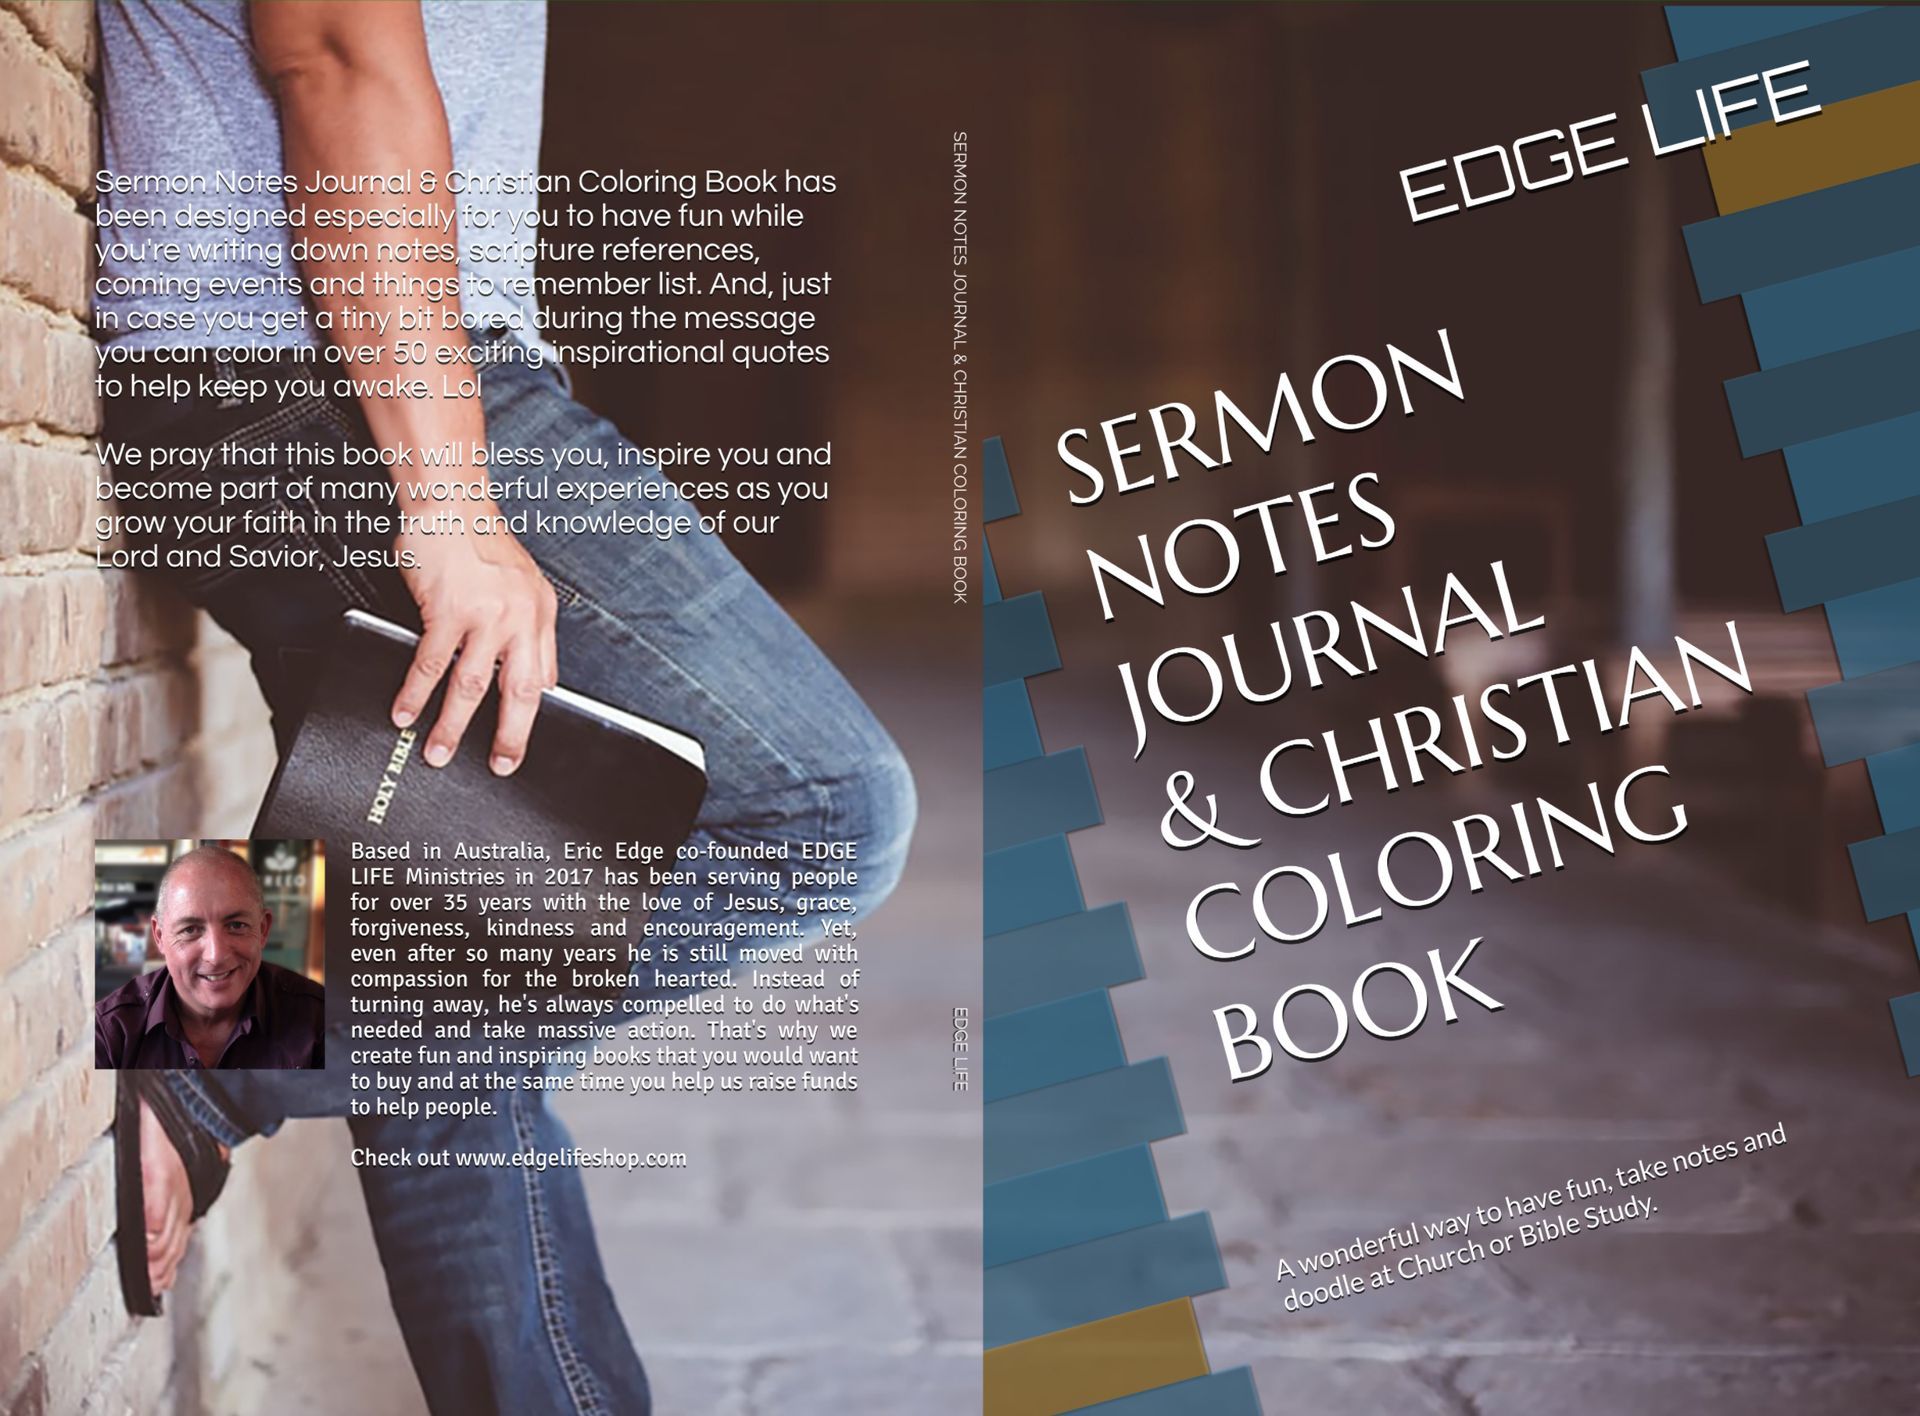 Sermon Notes Journal & Christian Colouring Book